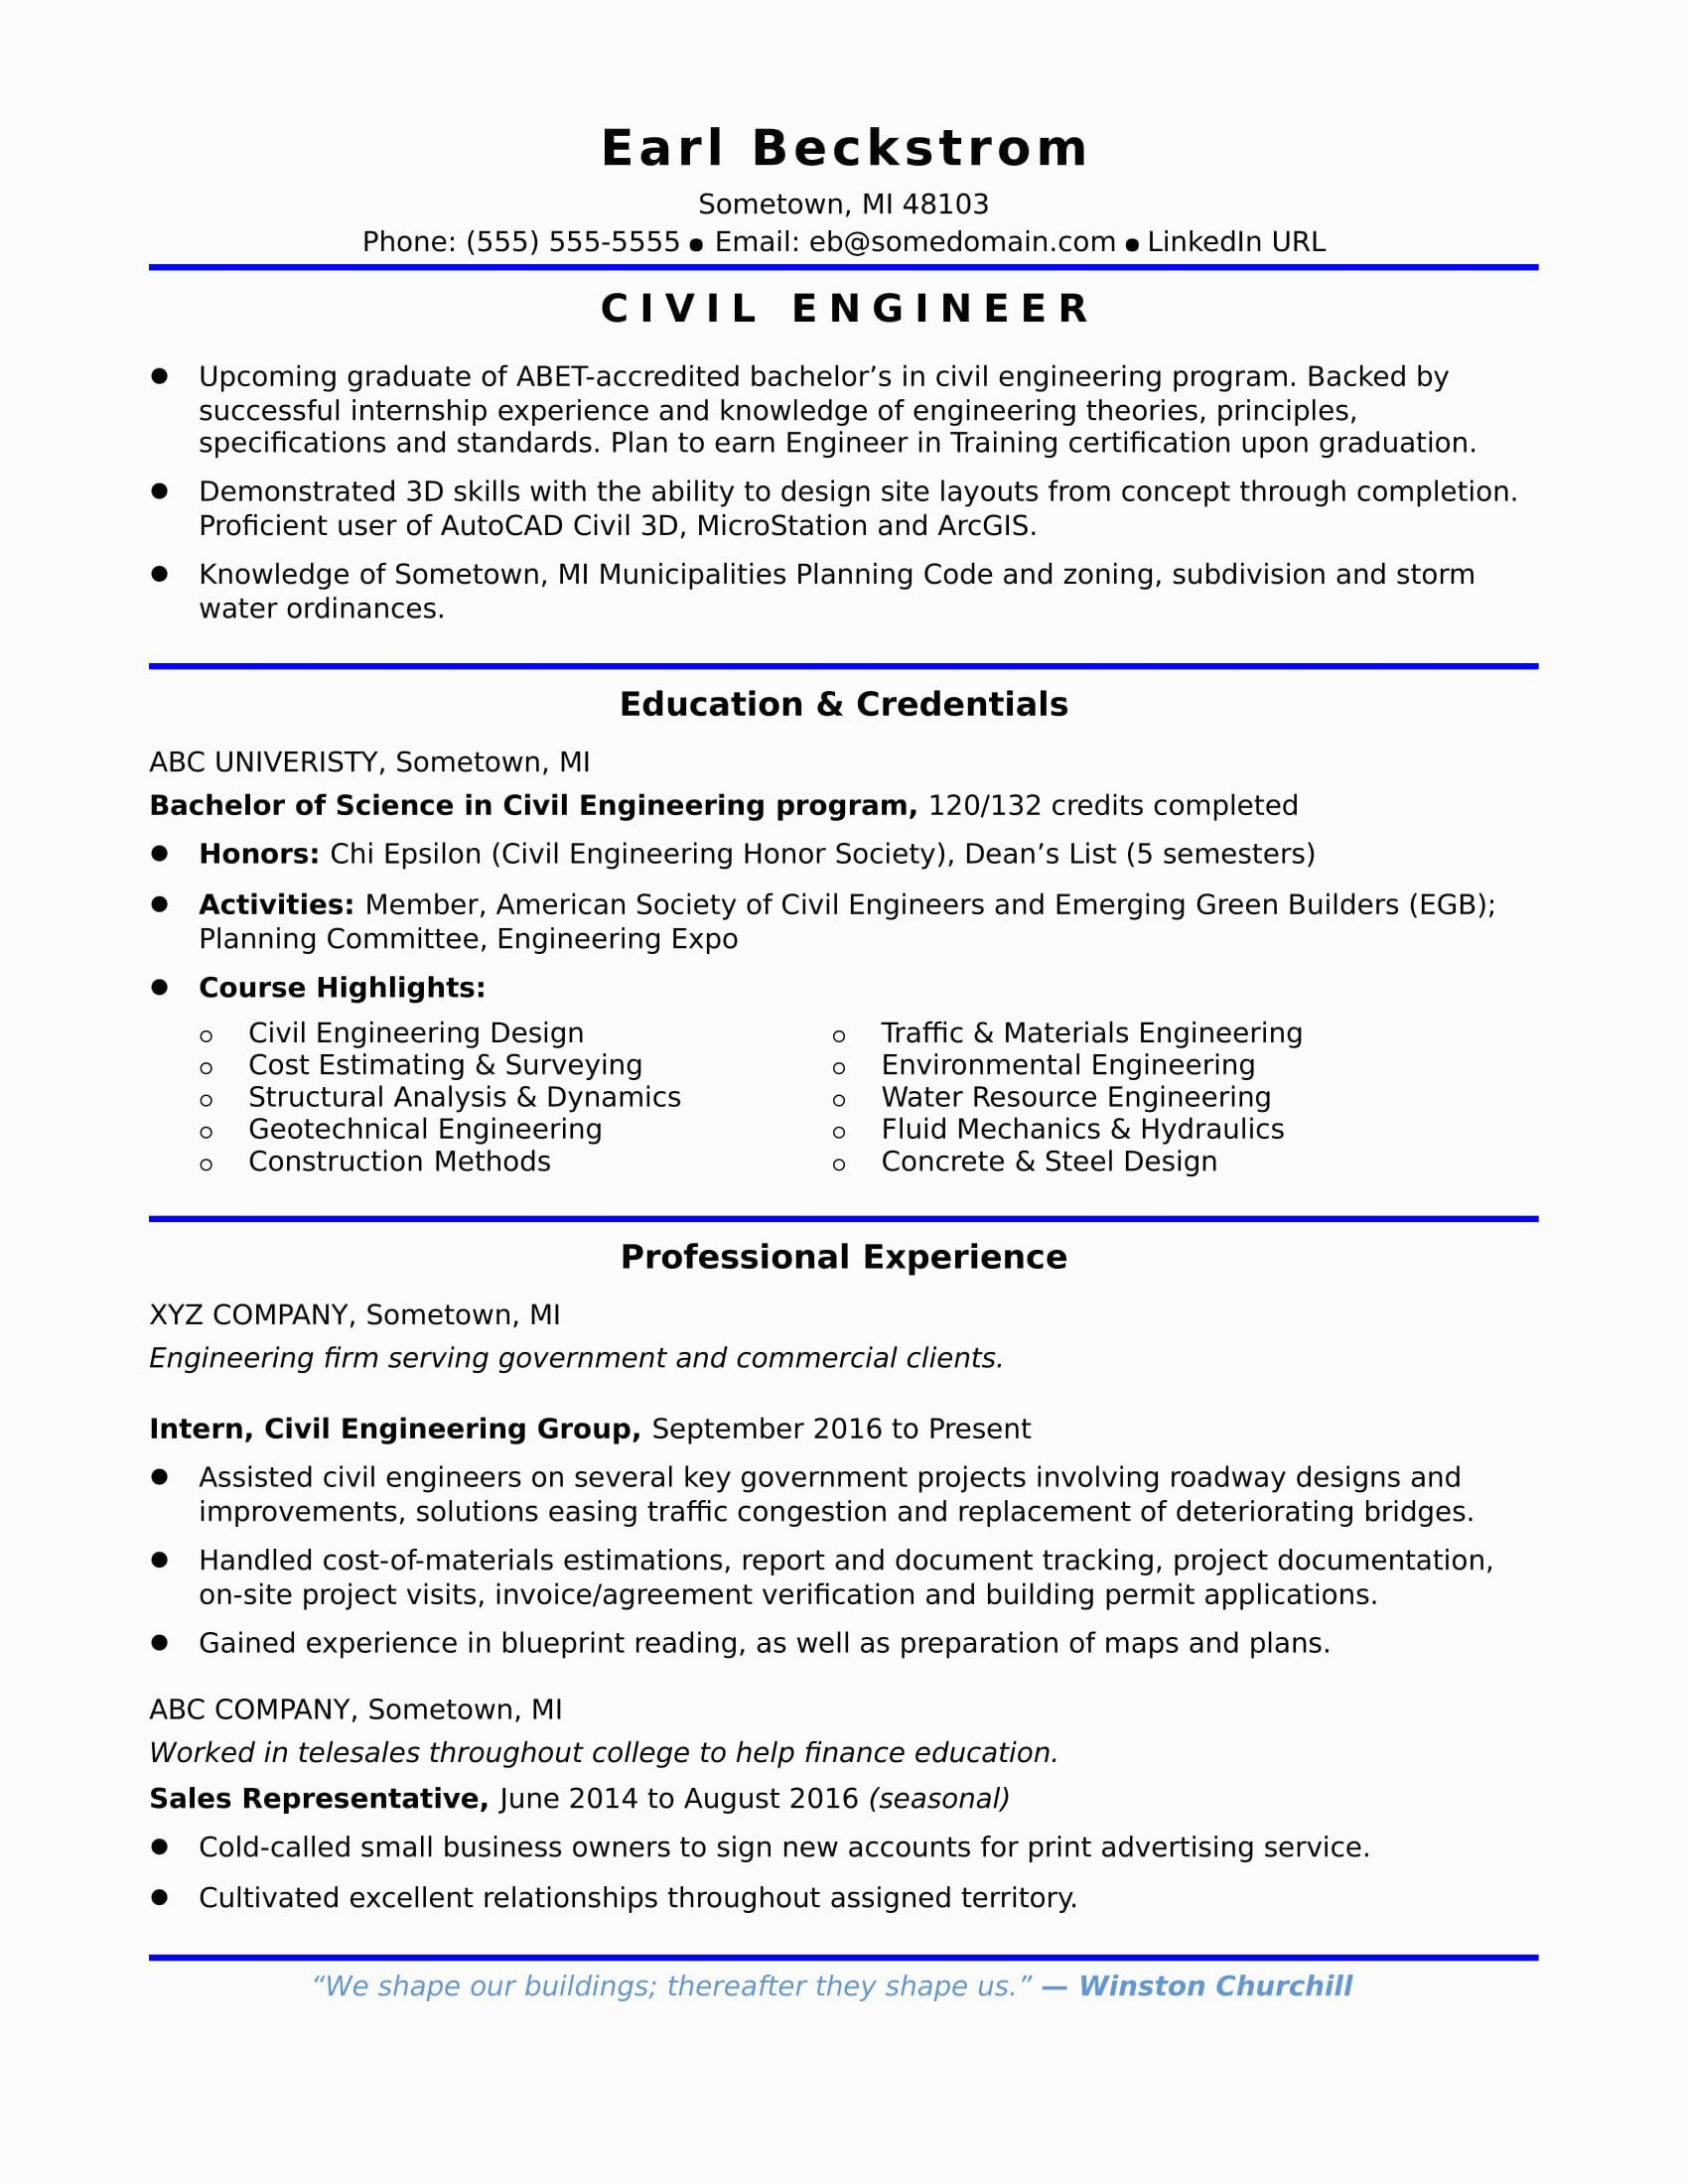 Sample Resume for Civil Engineer Fresh Graduate Sample Resume Civil Engineer Fresh Graduate Resume Layout